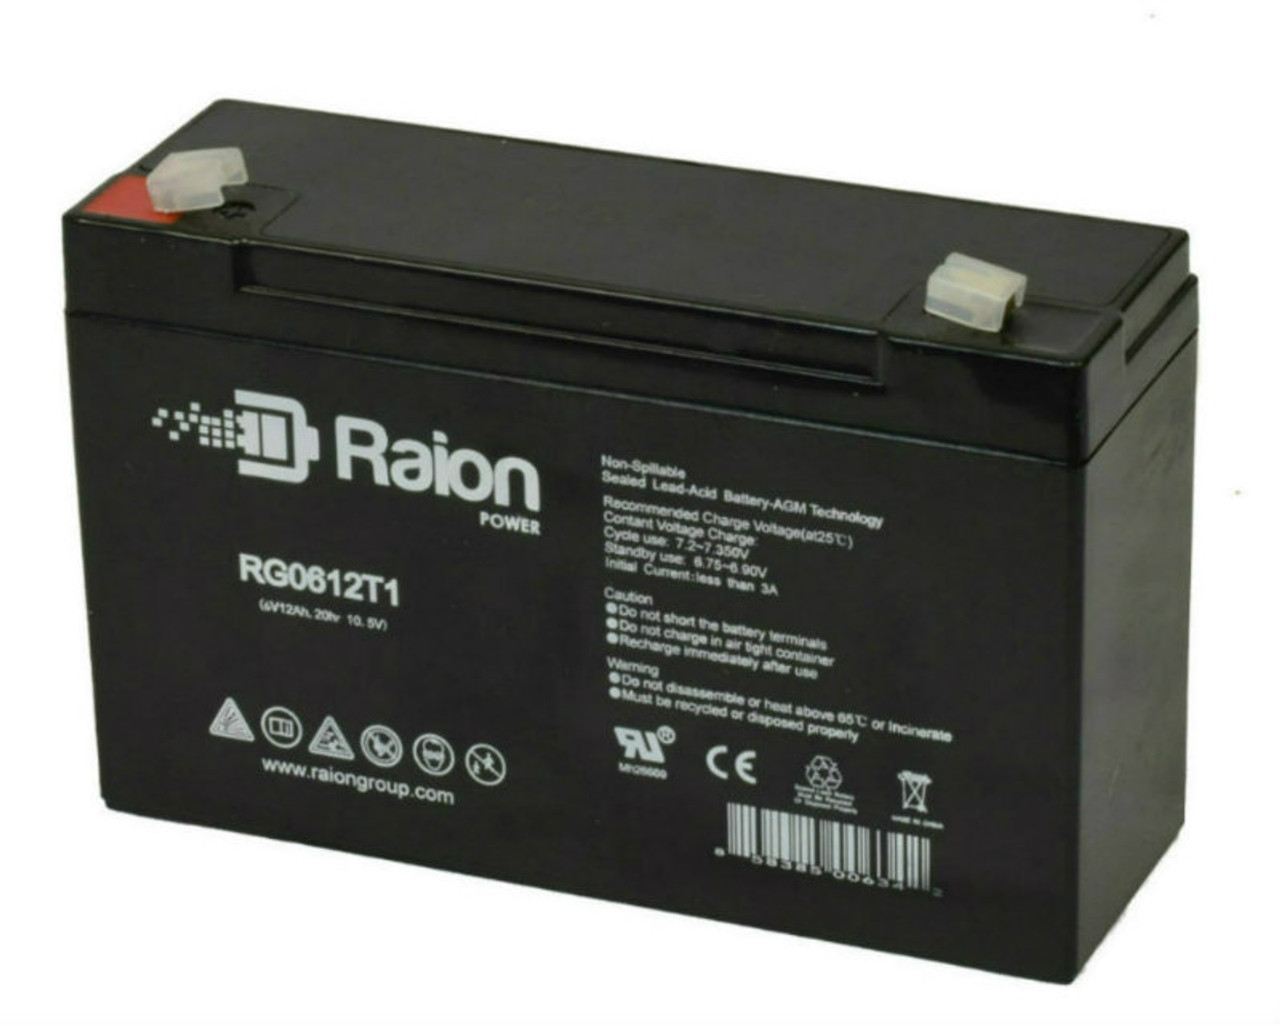 Raion Power RG06120T1 Replacement 6V 12Ah Emergency Light Battery for Elan GB6V8